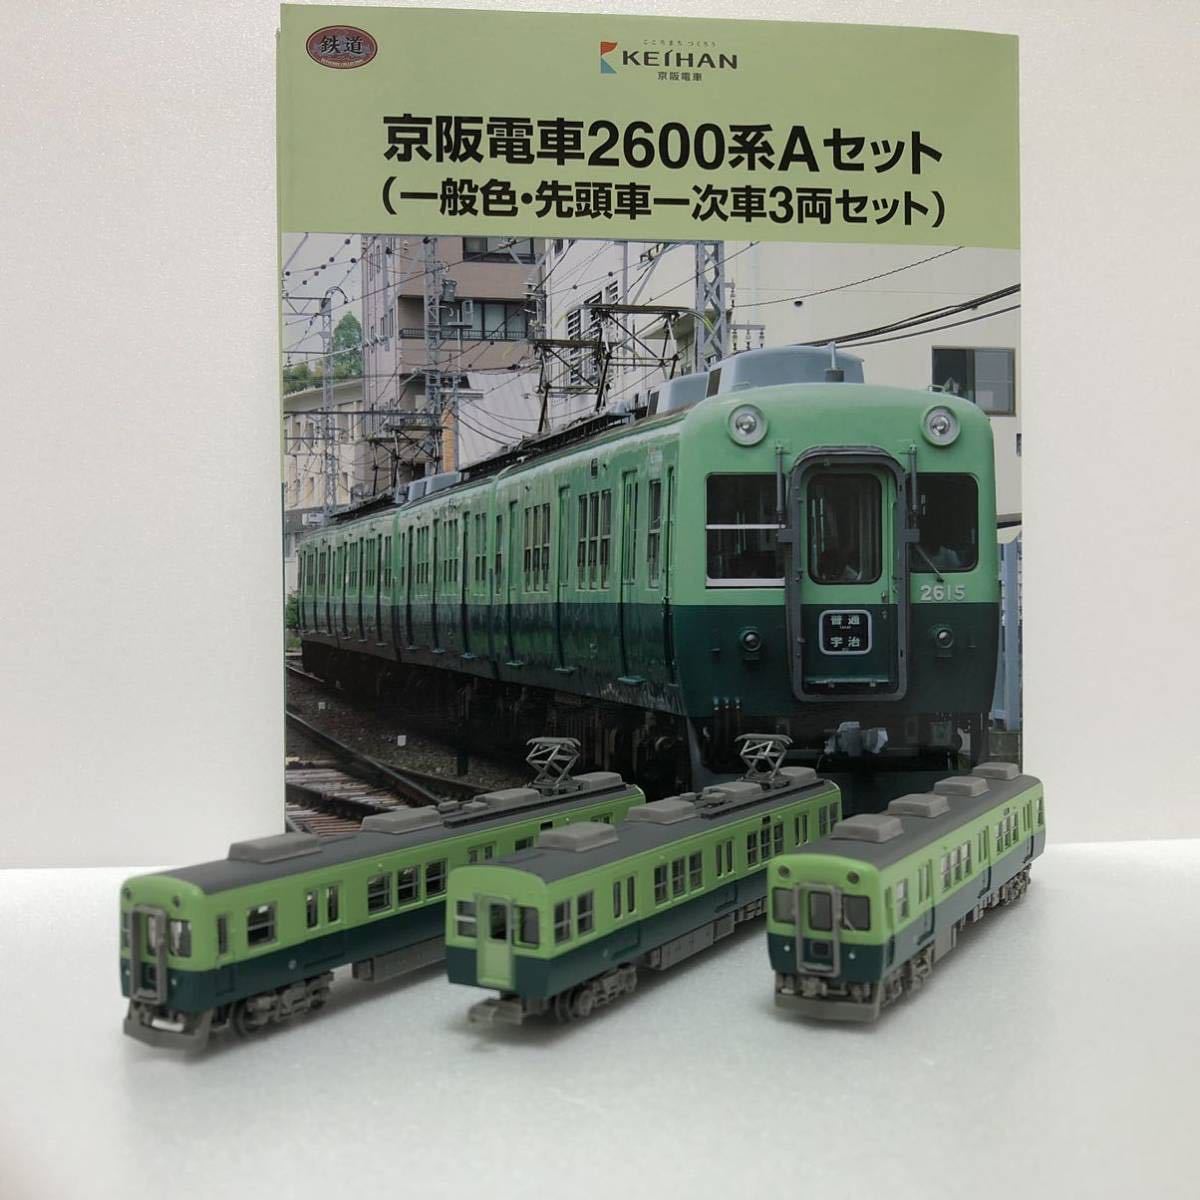 ヤフオク! -京阪2600系(鉄道模型)の中古品・新品・未使用品一覧